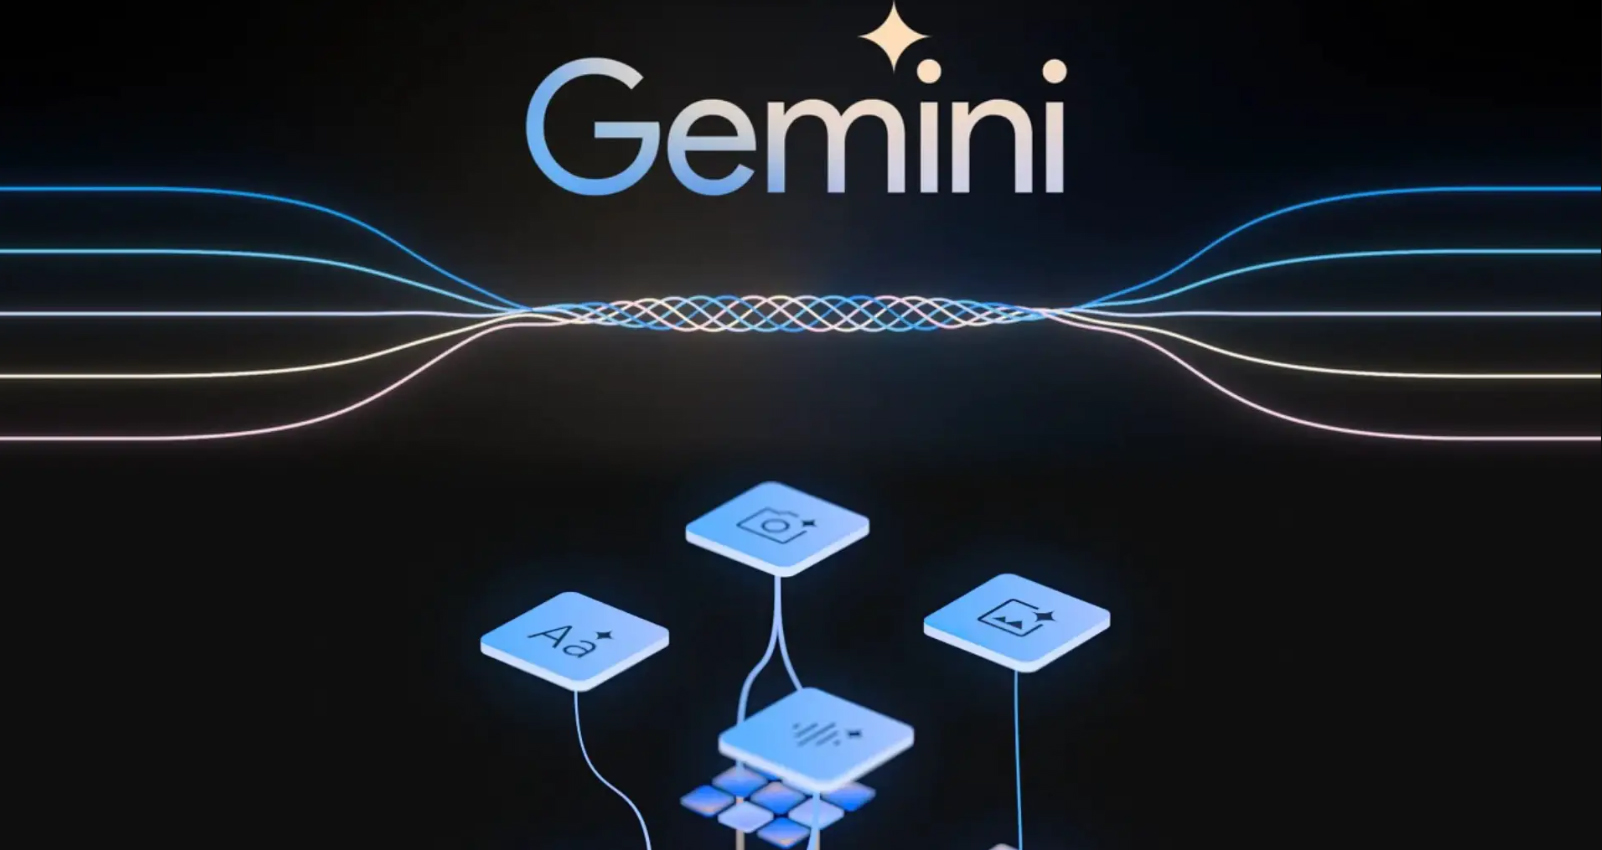 Google faces backlash over Gemini chatbot